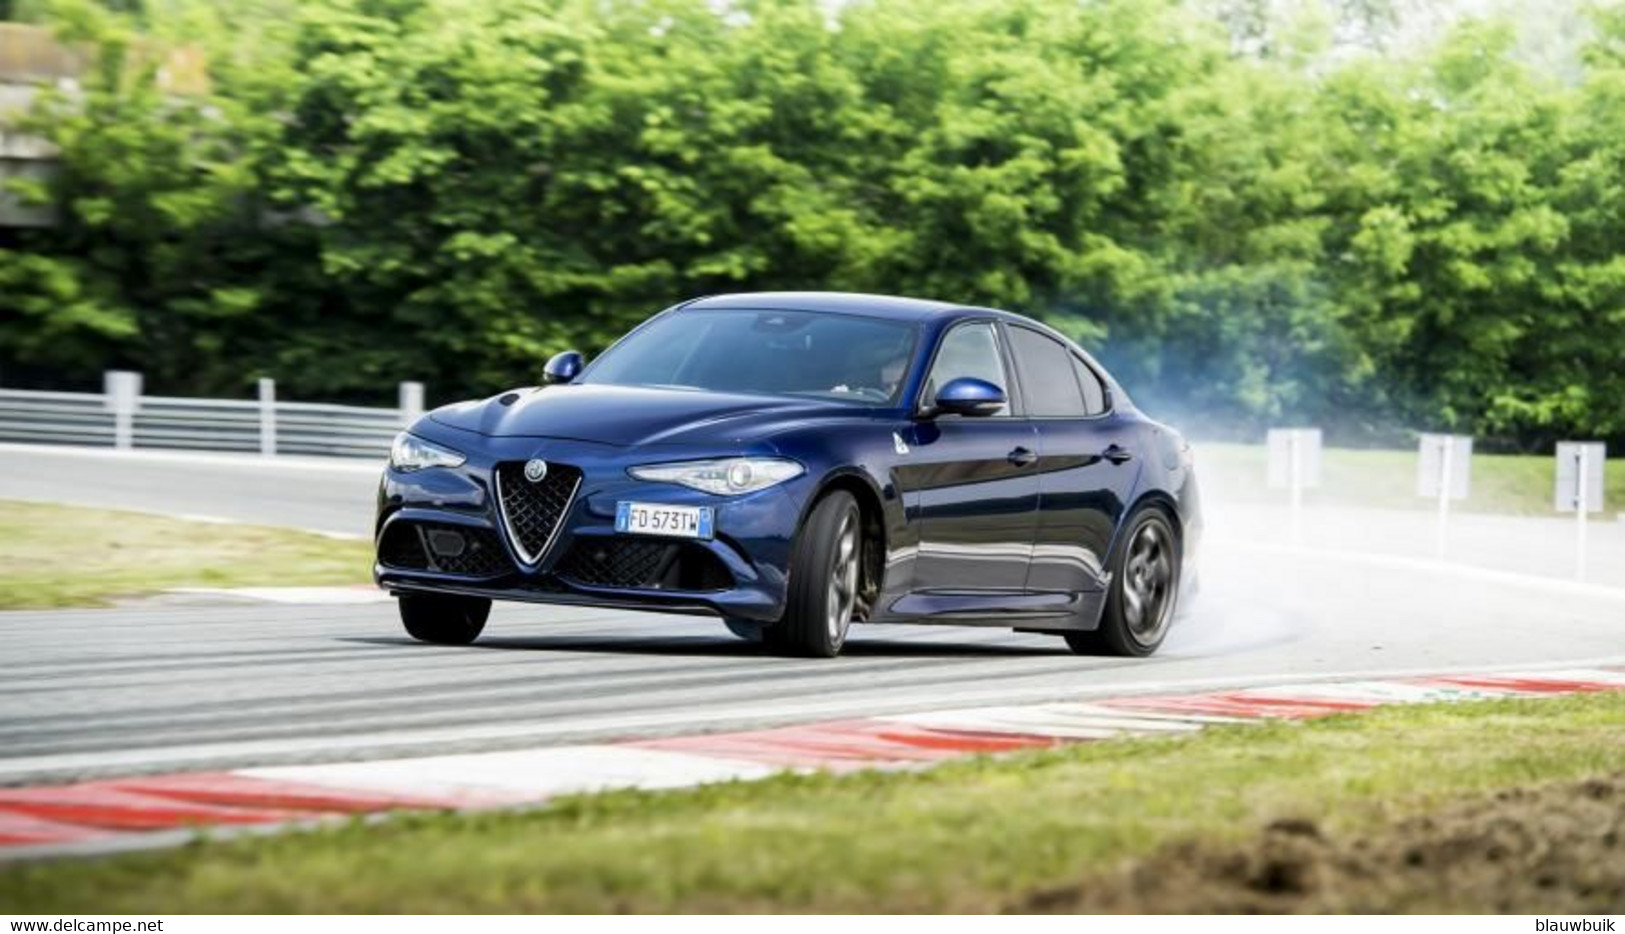 Top Gear Magazine N°133 - 2016 Alfa's comeback